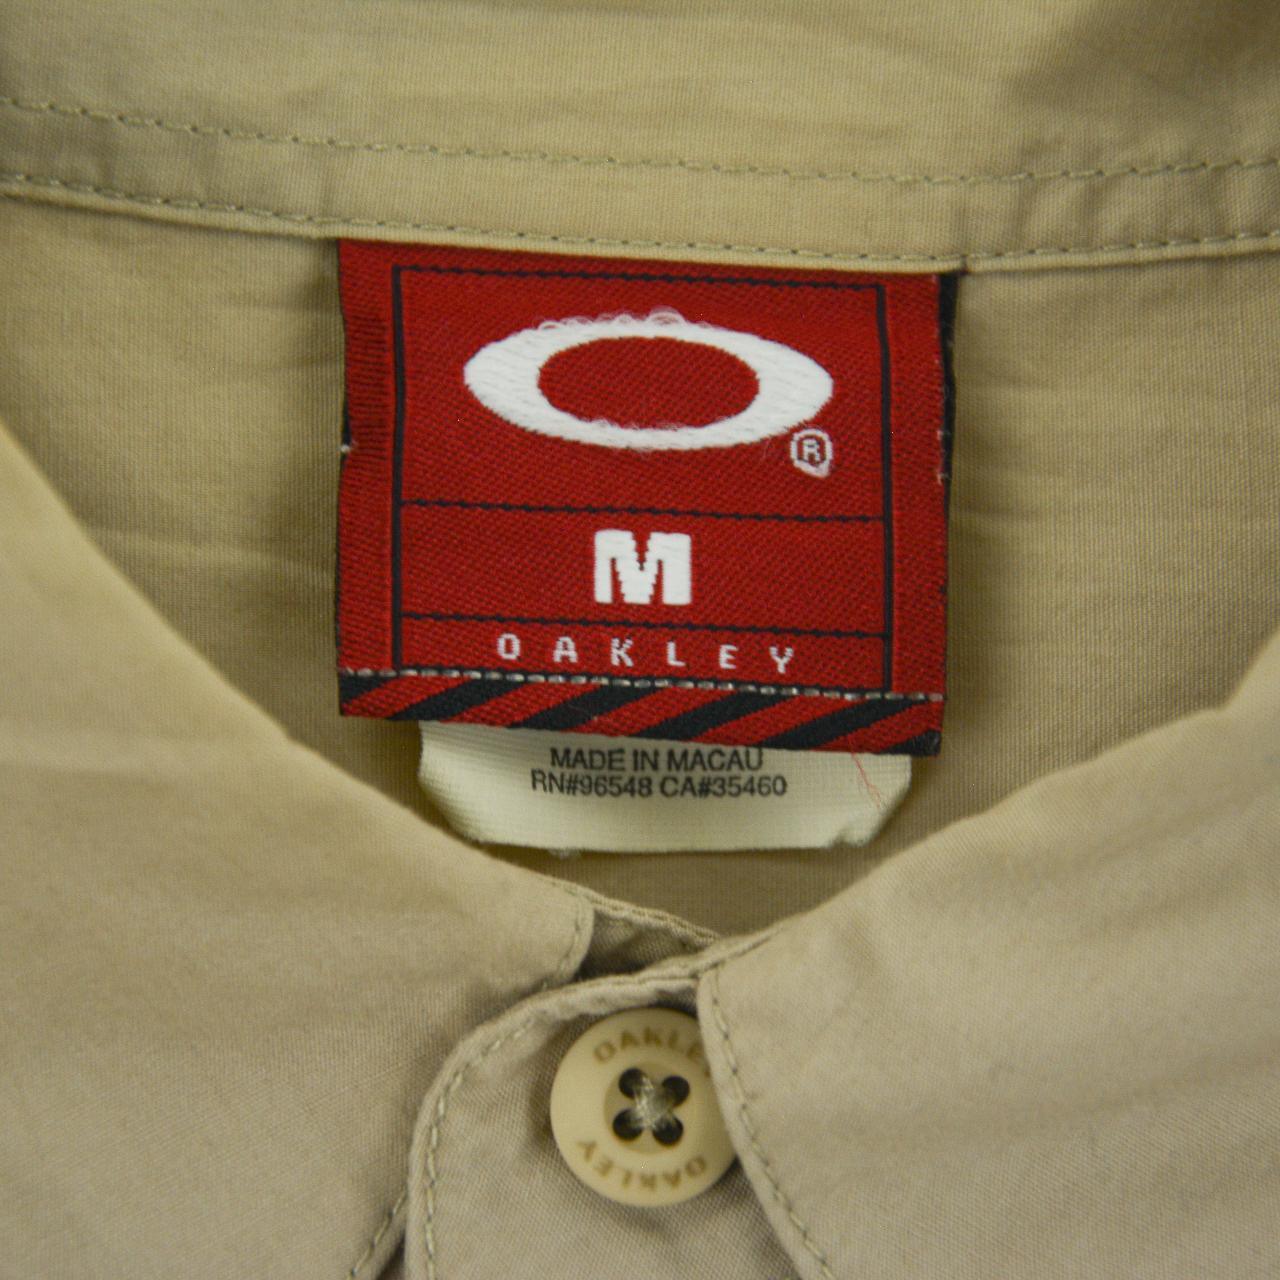 Vintage Oakley Button Up Shirt Size M - Known Source